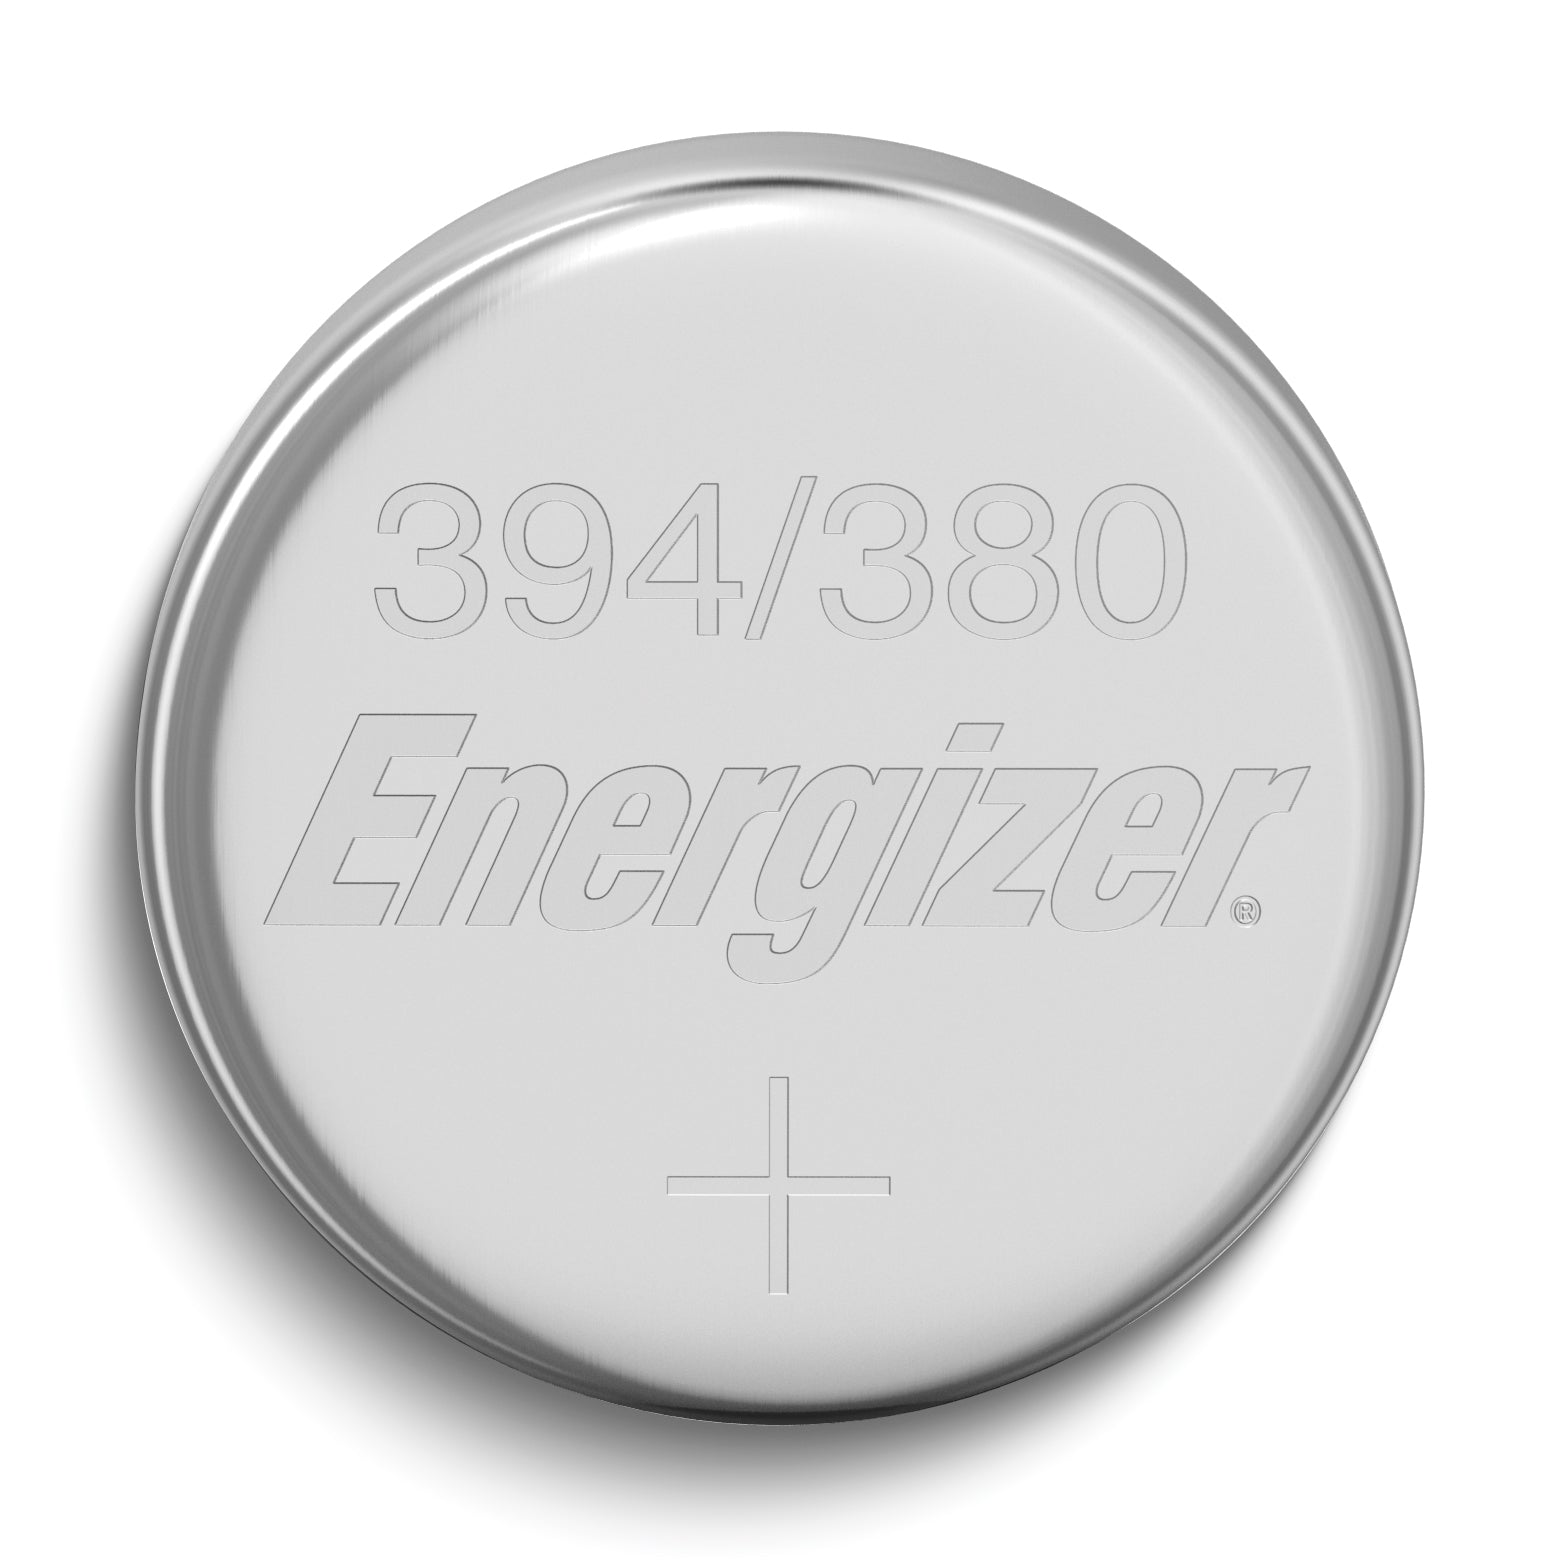 Pkg/(5) Type 394/380 Energizer Watch Batteries Tear Strip